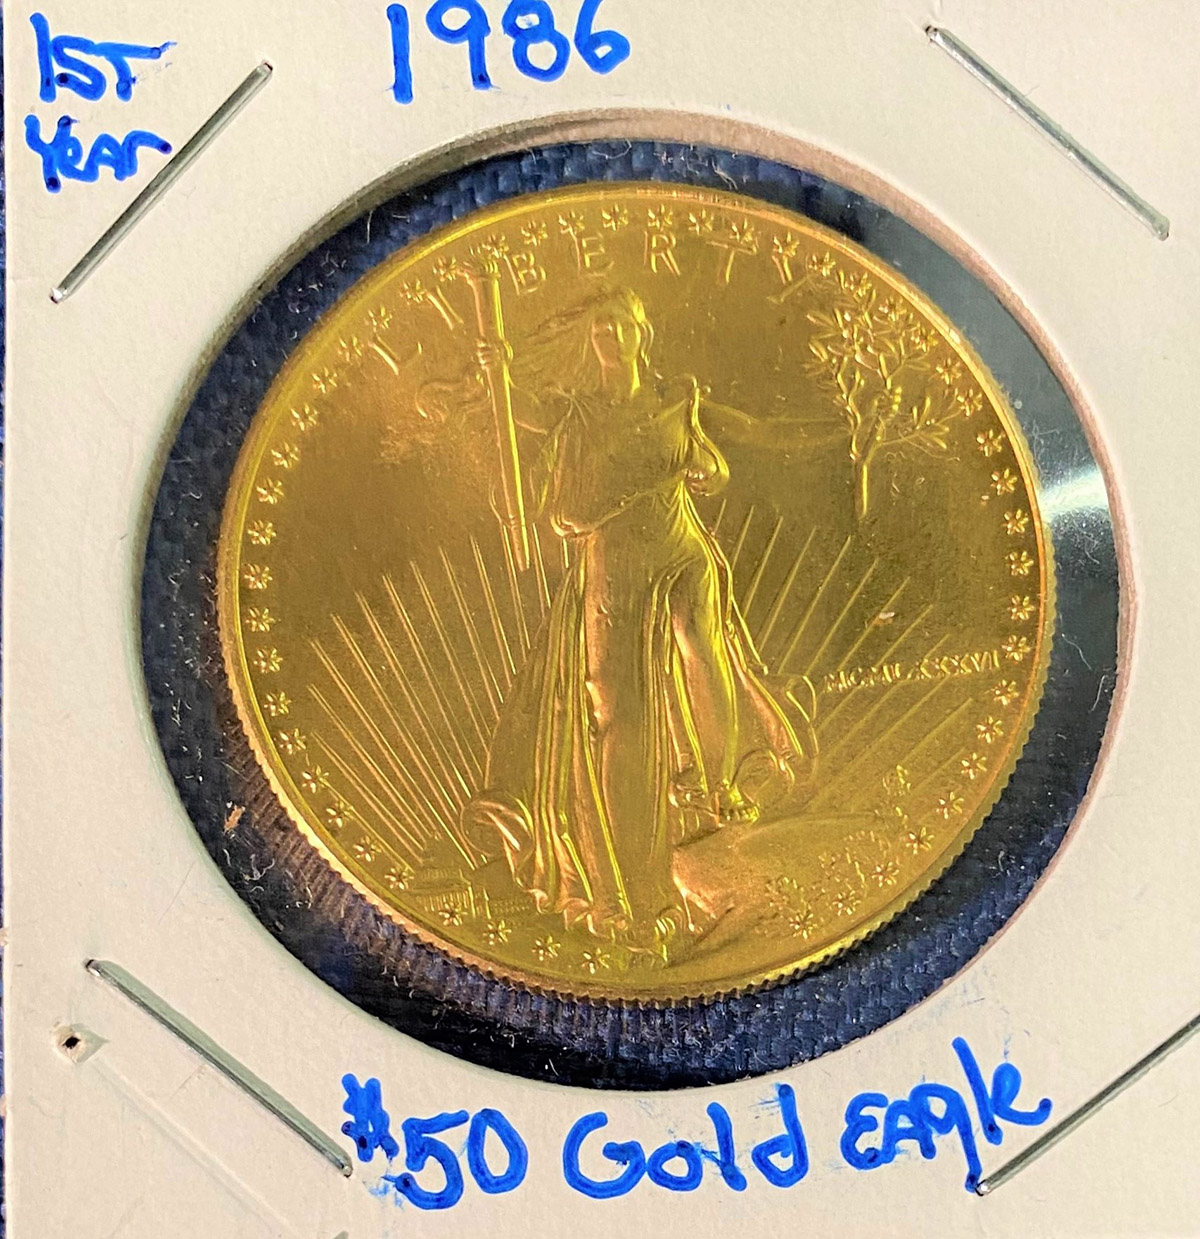 1986 $50. Gold Coin $2,415